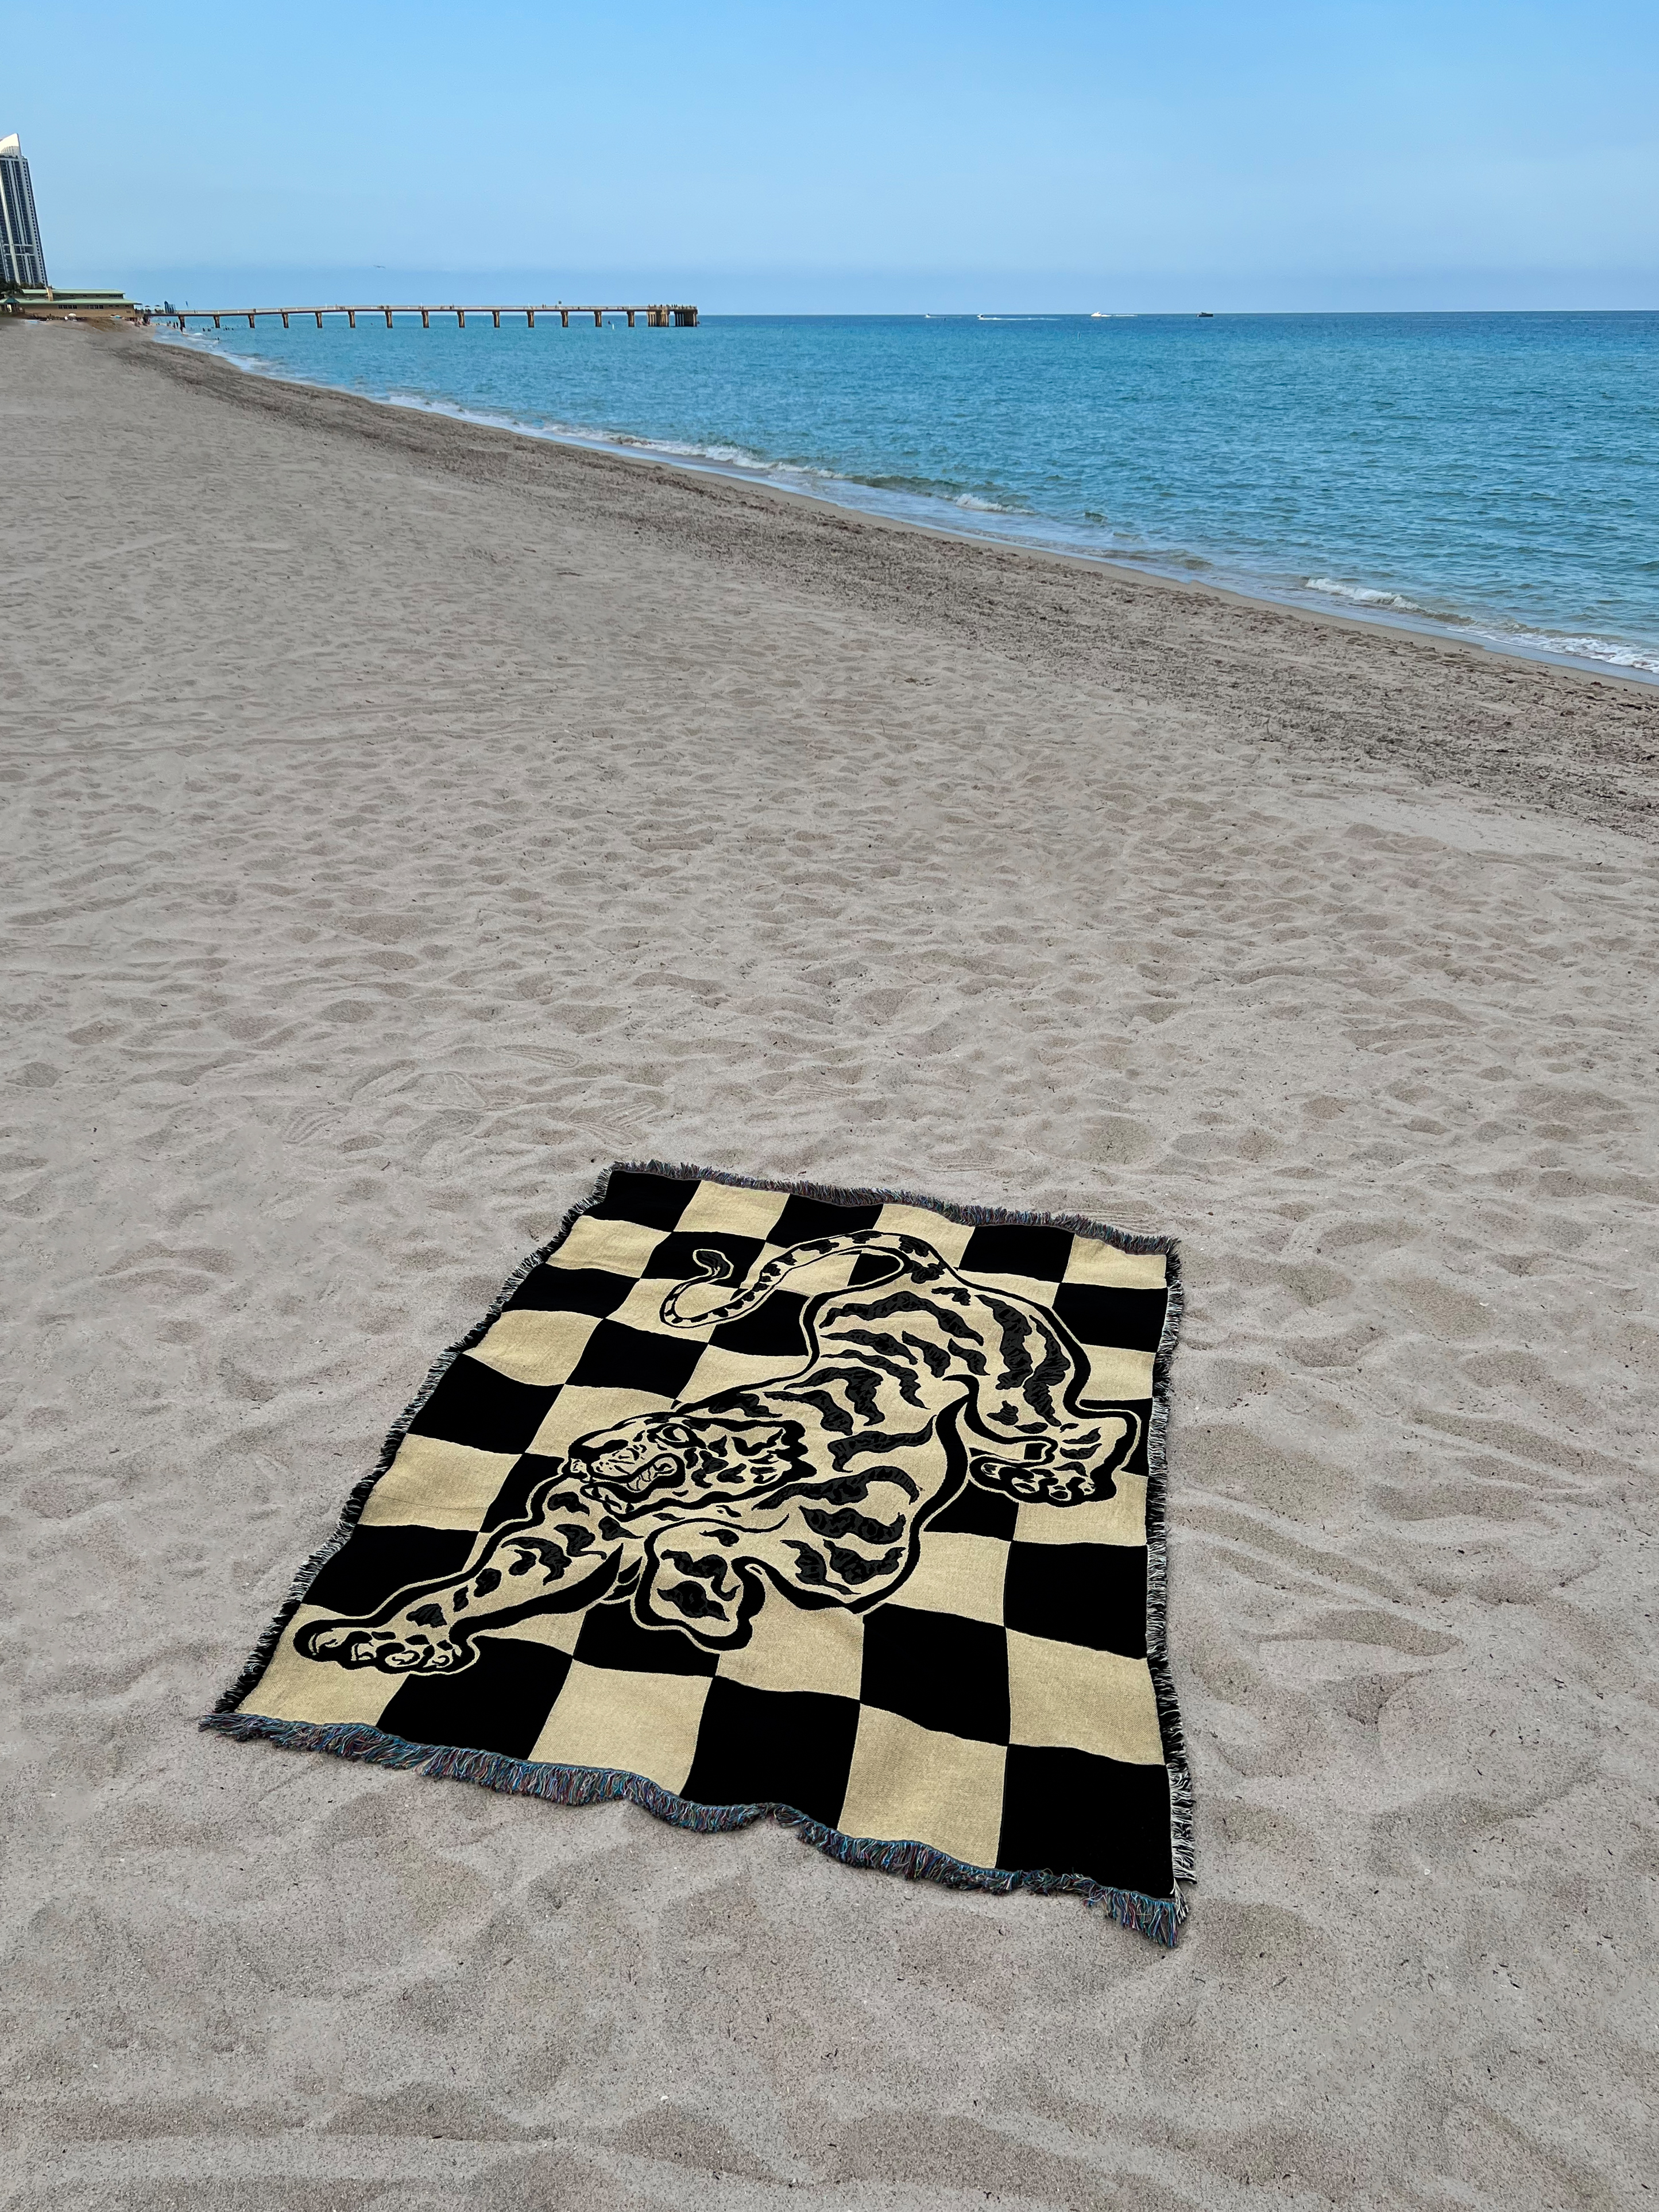 Art Cosmos Tiger's Chessboard Woven Cotton Blanket